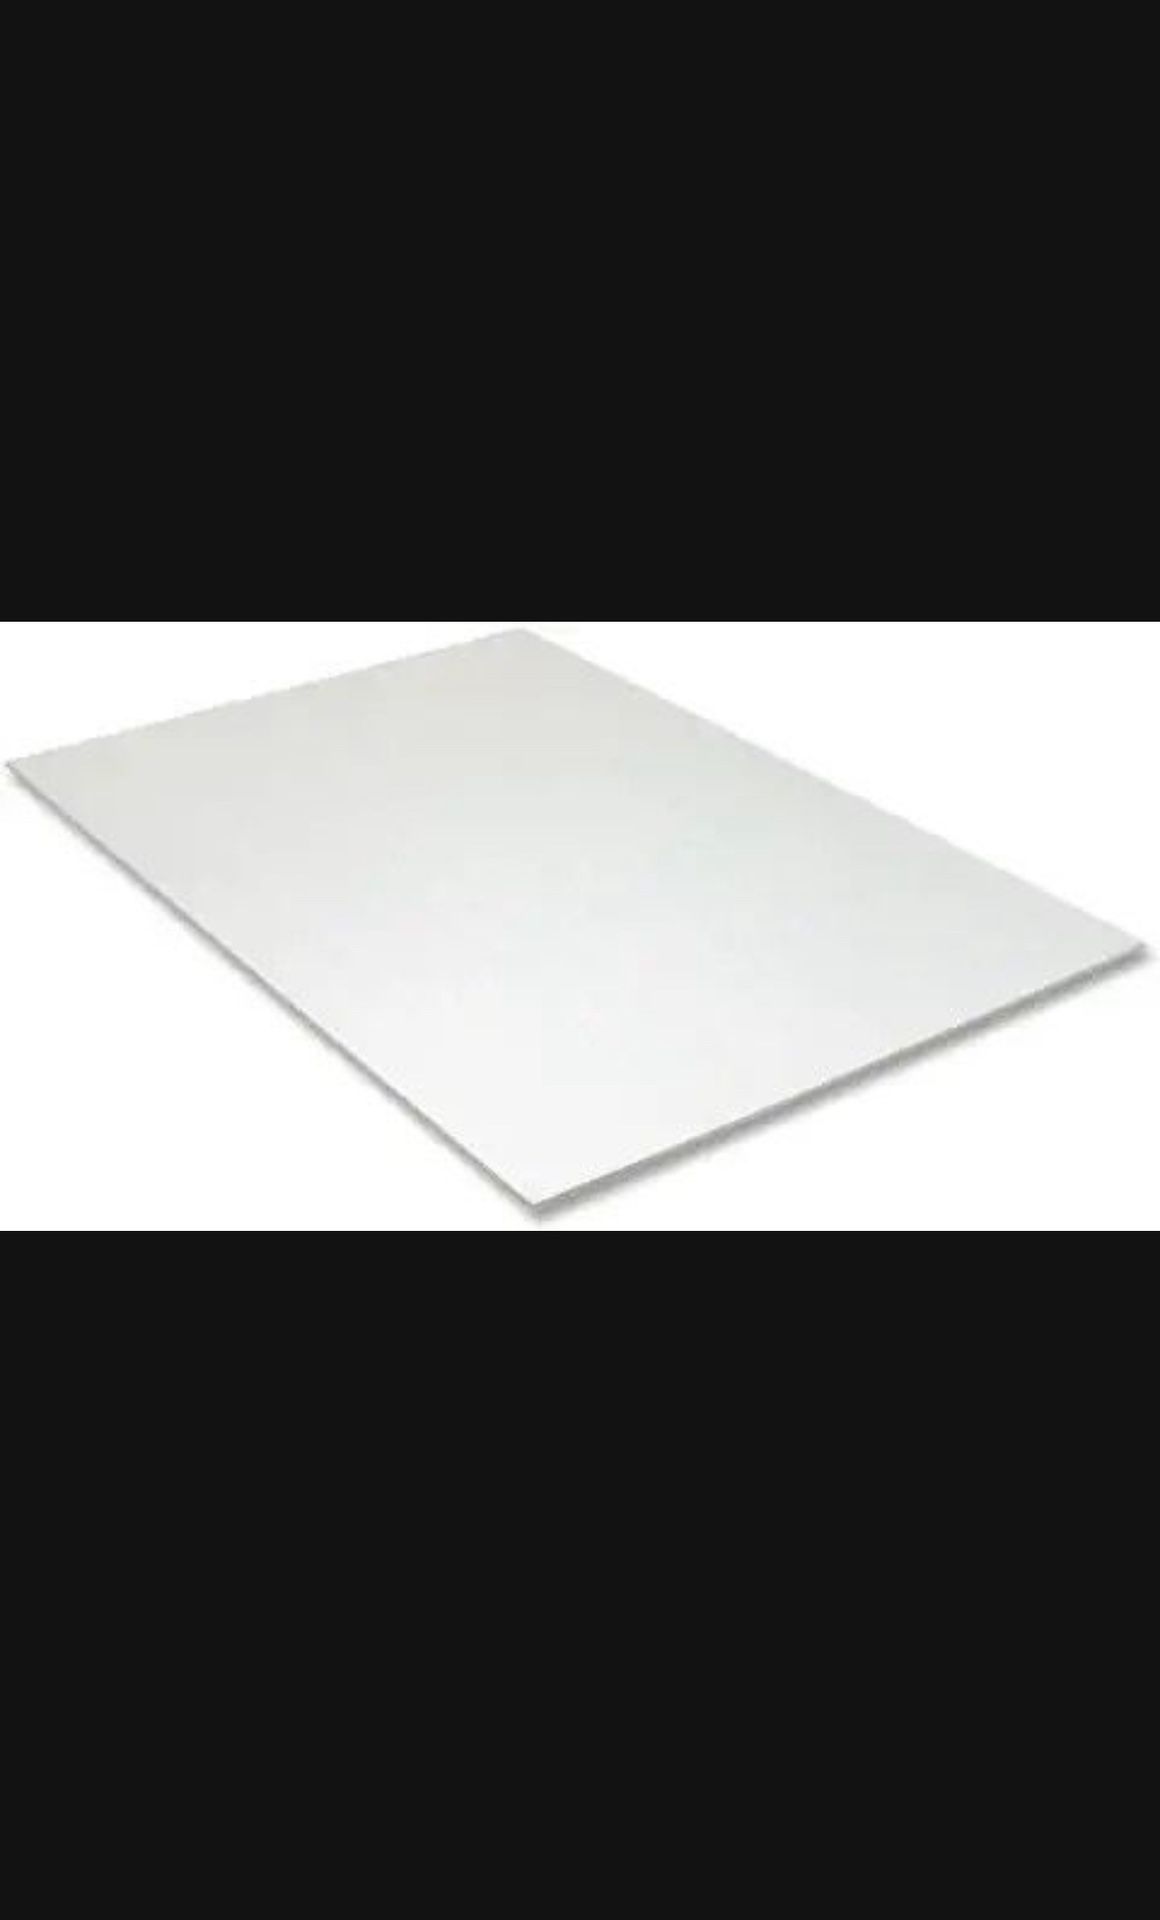 Brand New white foamboard 30 x 40 - 3-sheet pack